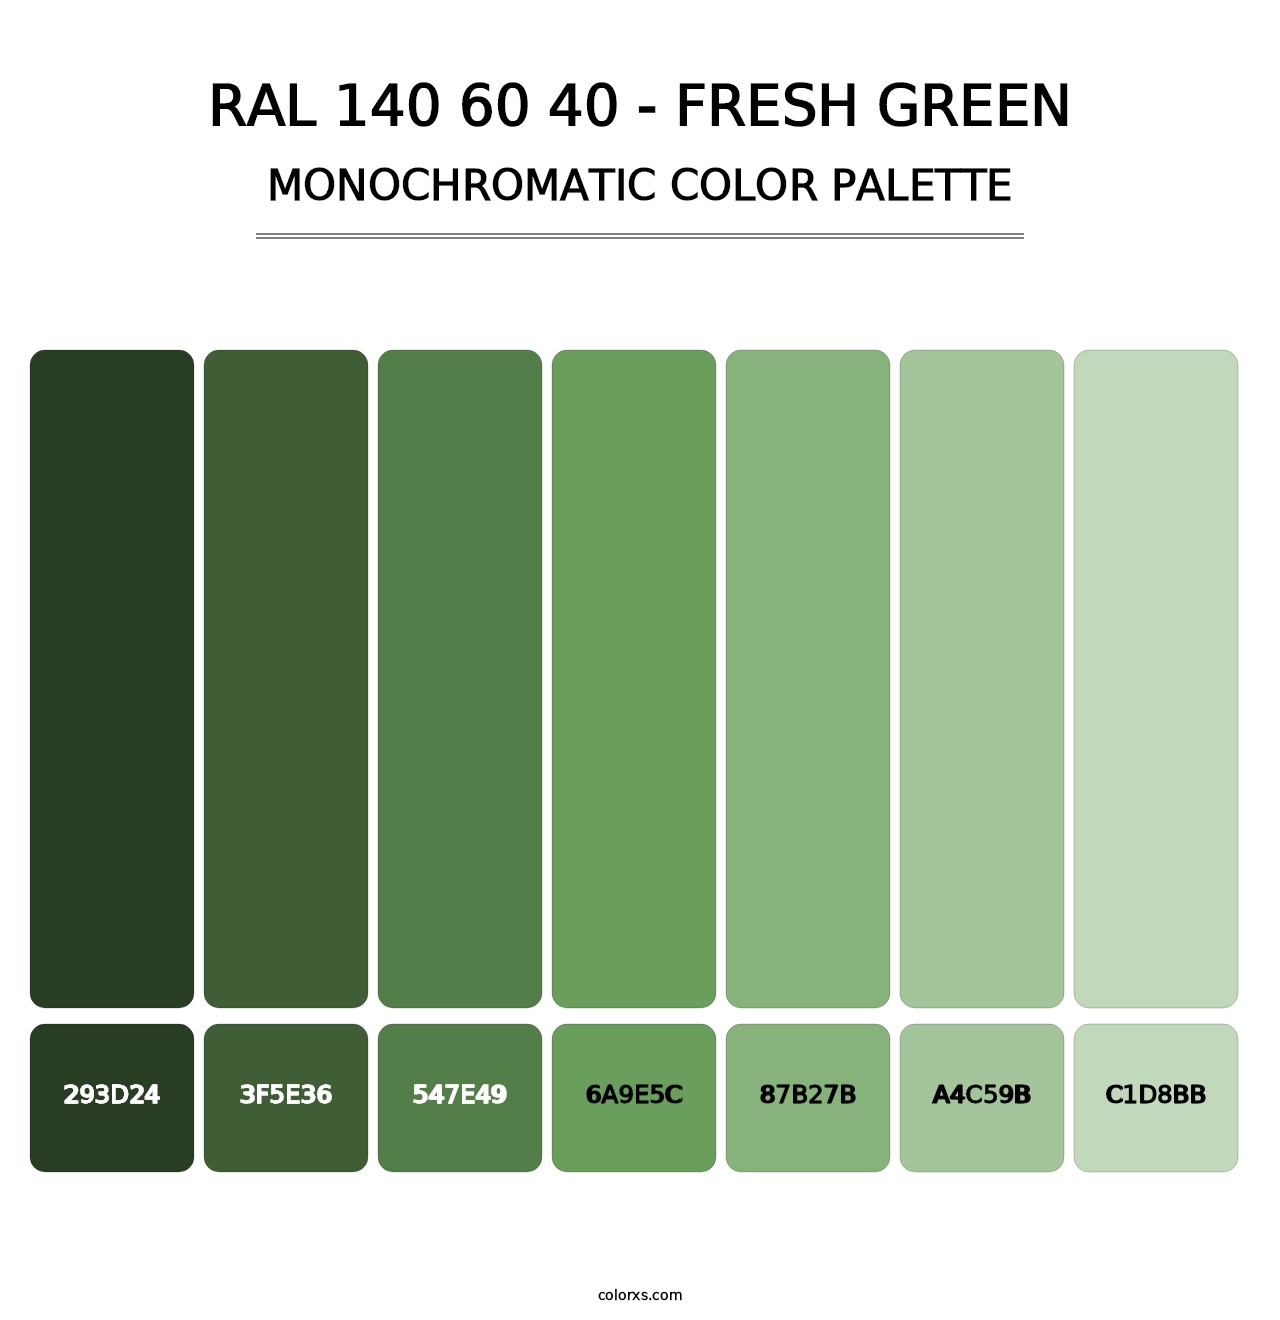 RAL 140 60 40 - Fresh Green - Monochromatic Color Palette